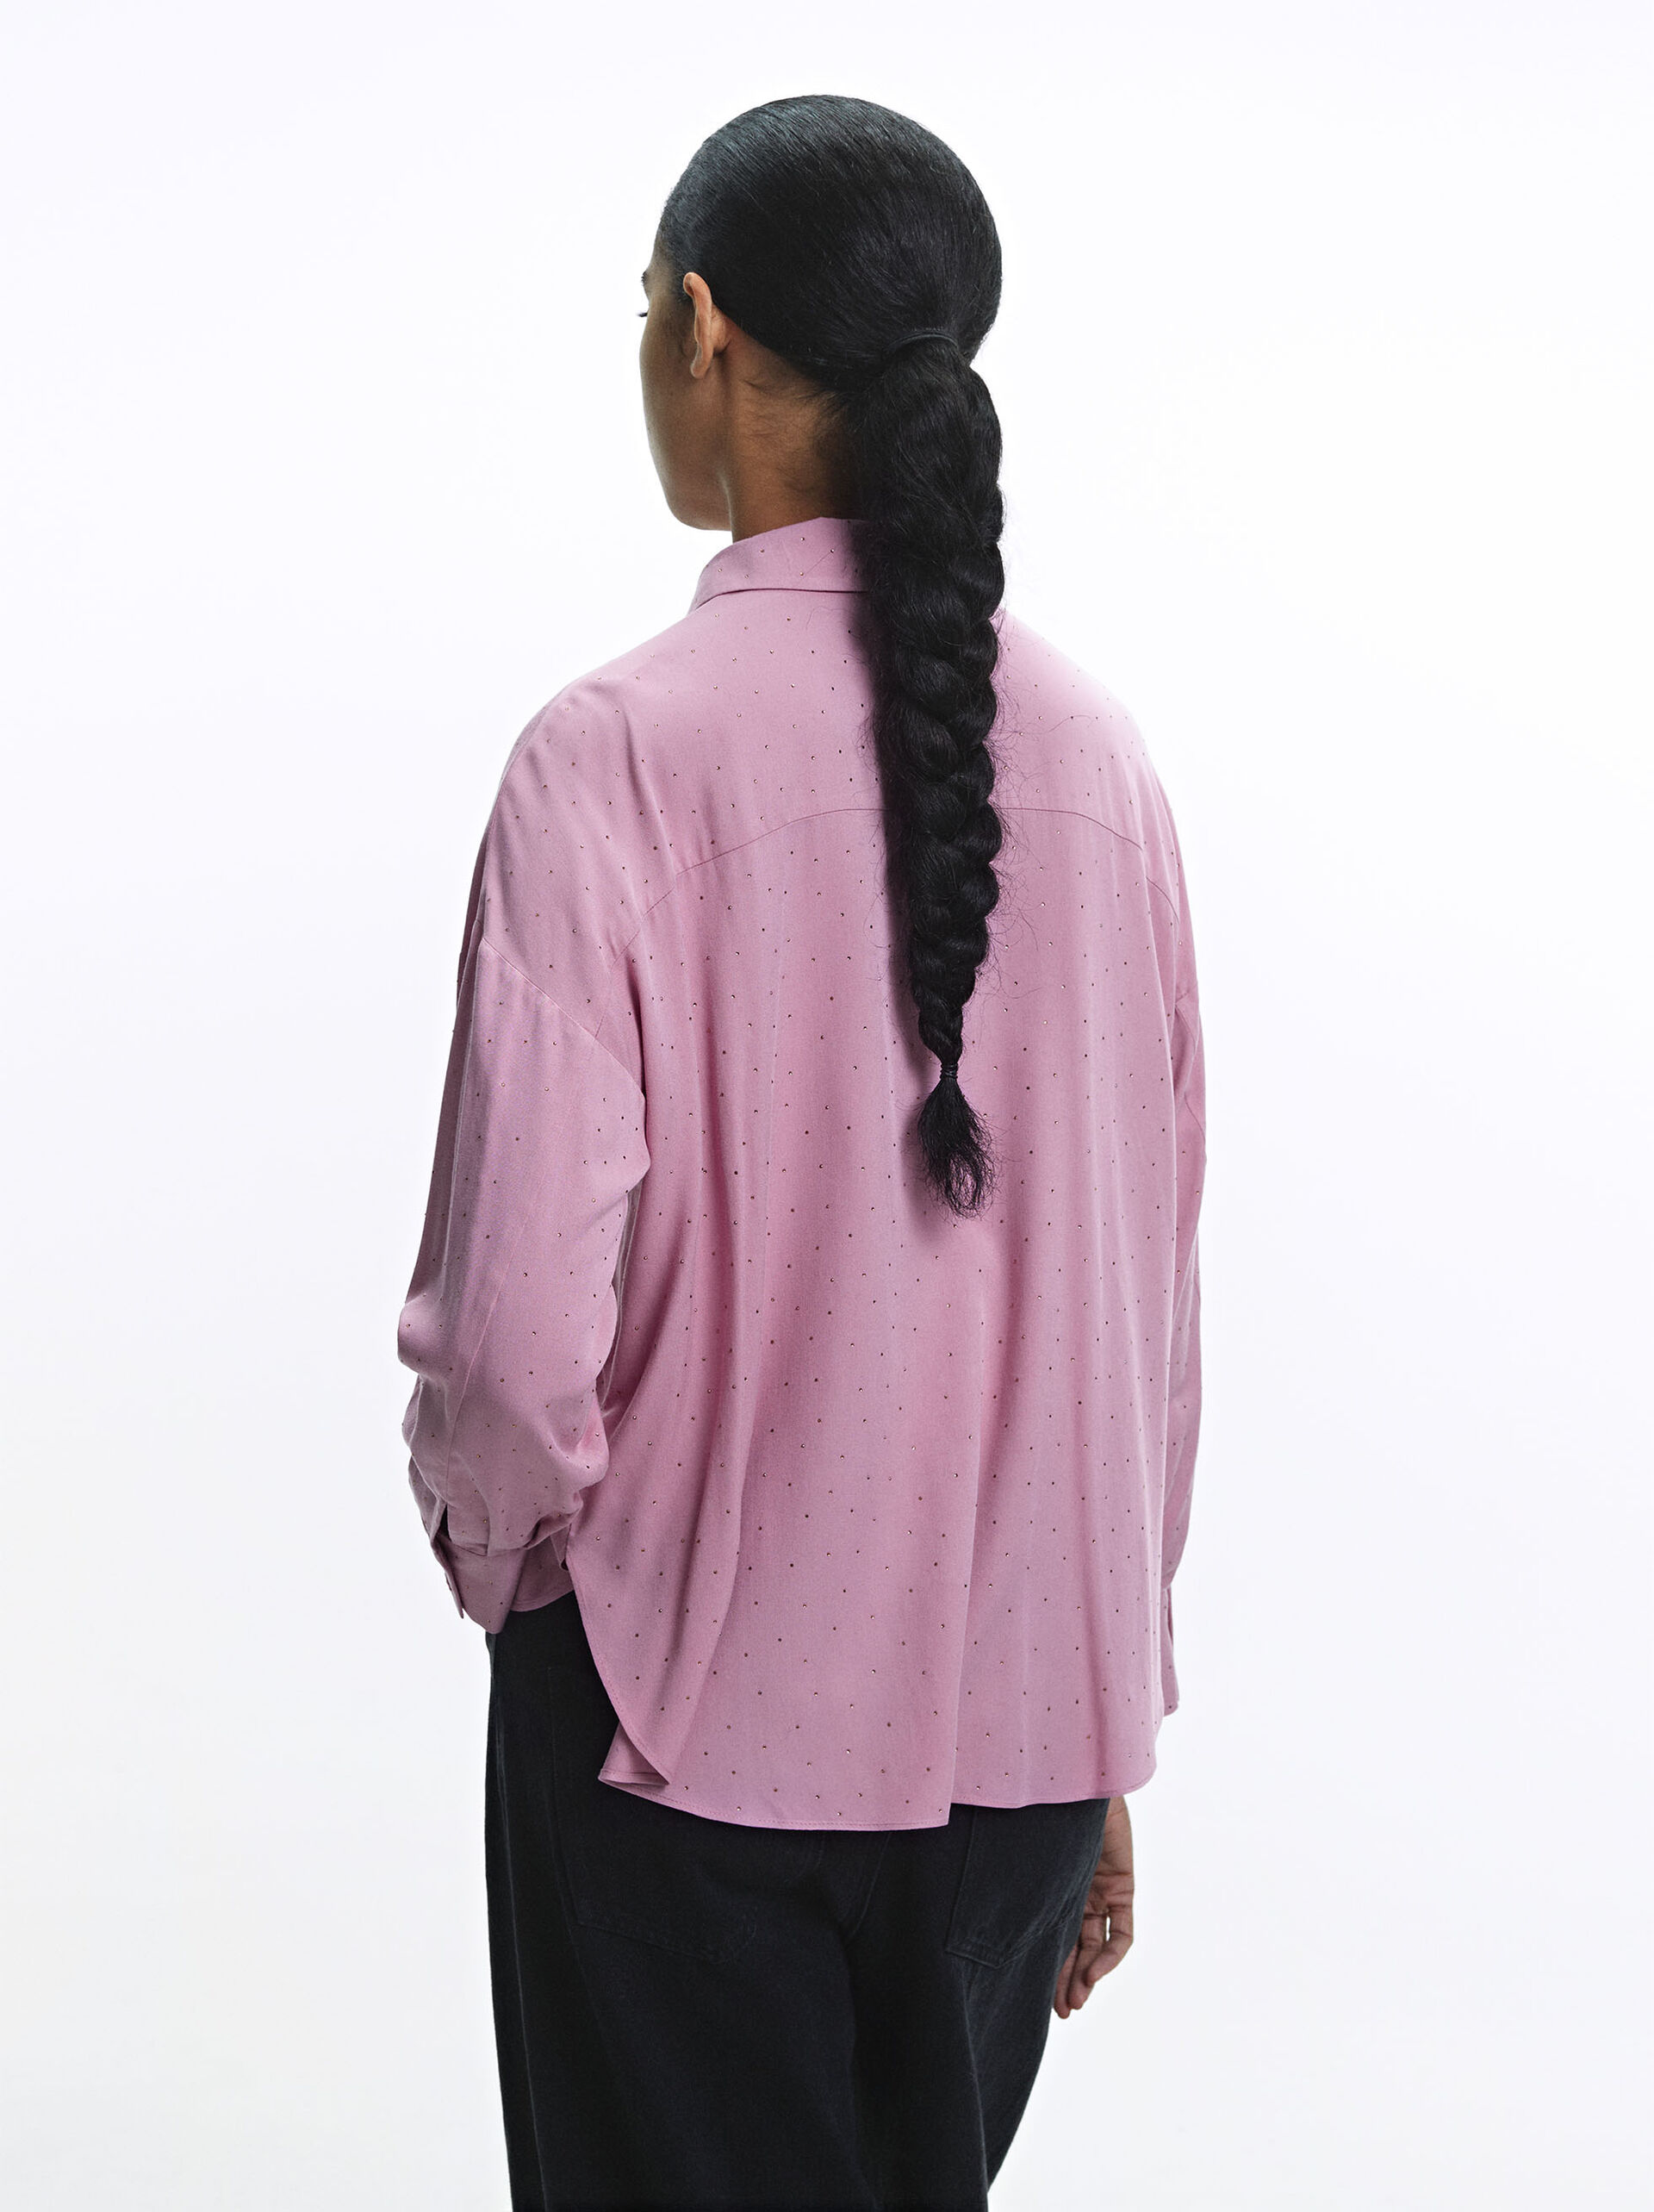 Long-Sleeve Shirt With Rhinestones image number 3.0